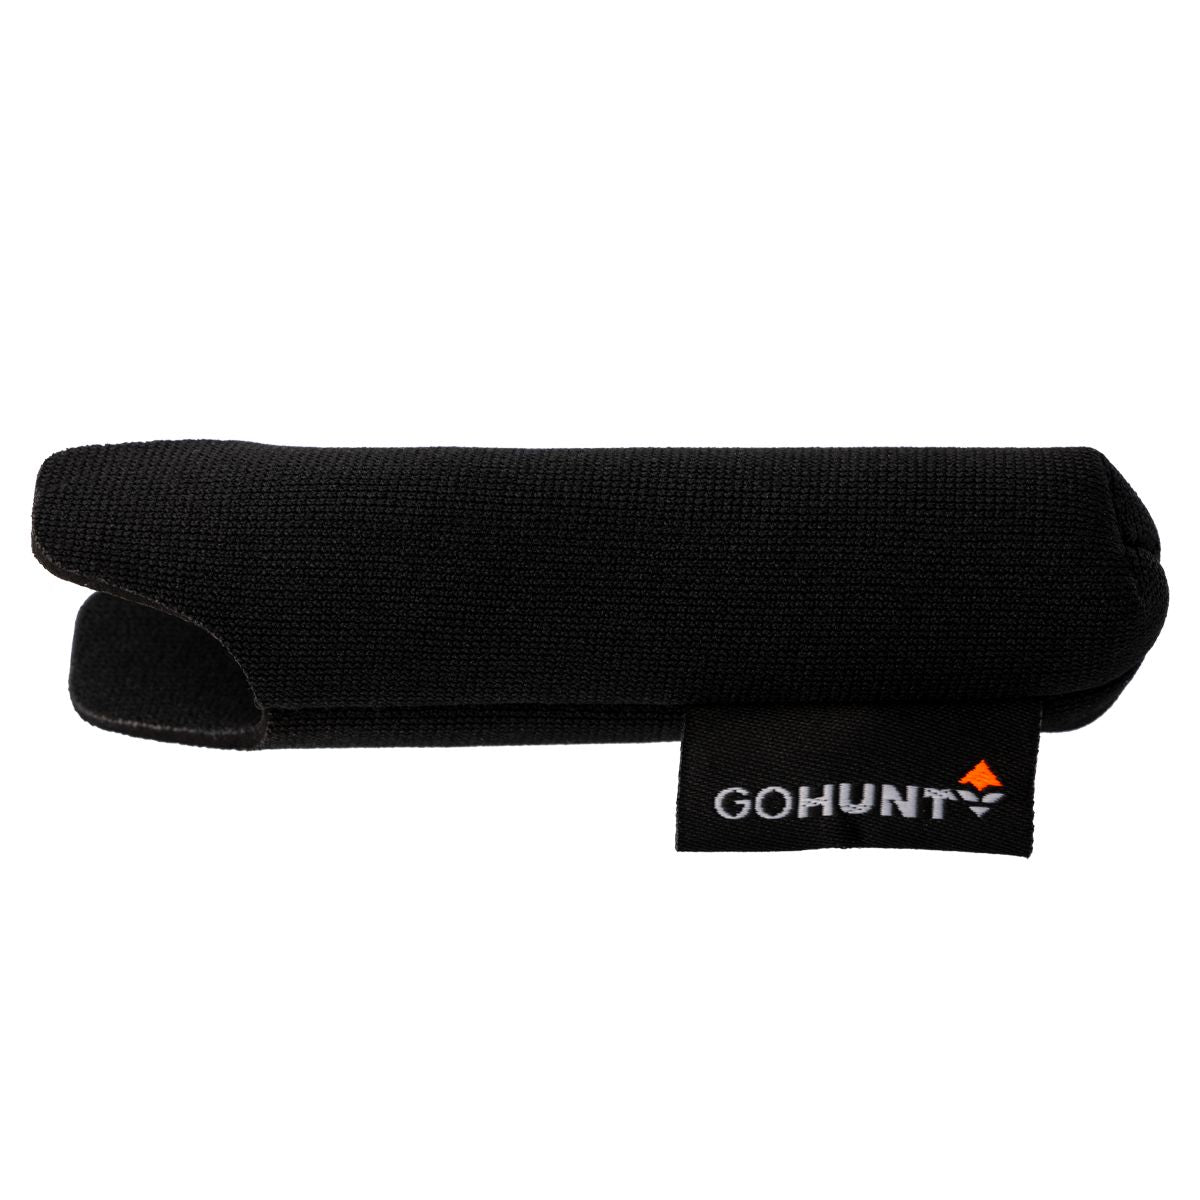 GOHUNT Barrel Topper in Black by GOHUNT | GOHUNT - GOHUNT Shop